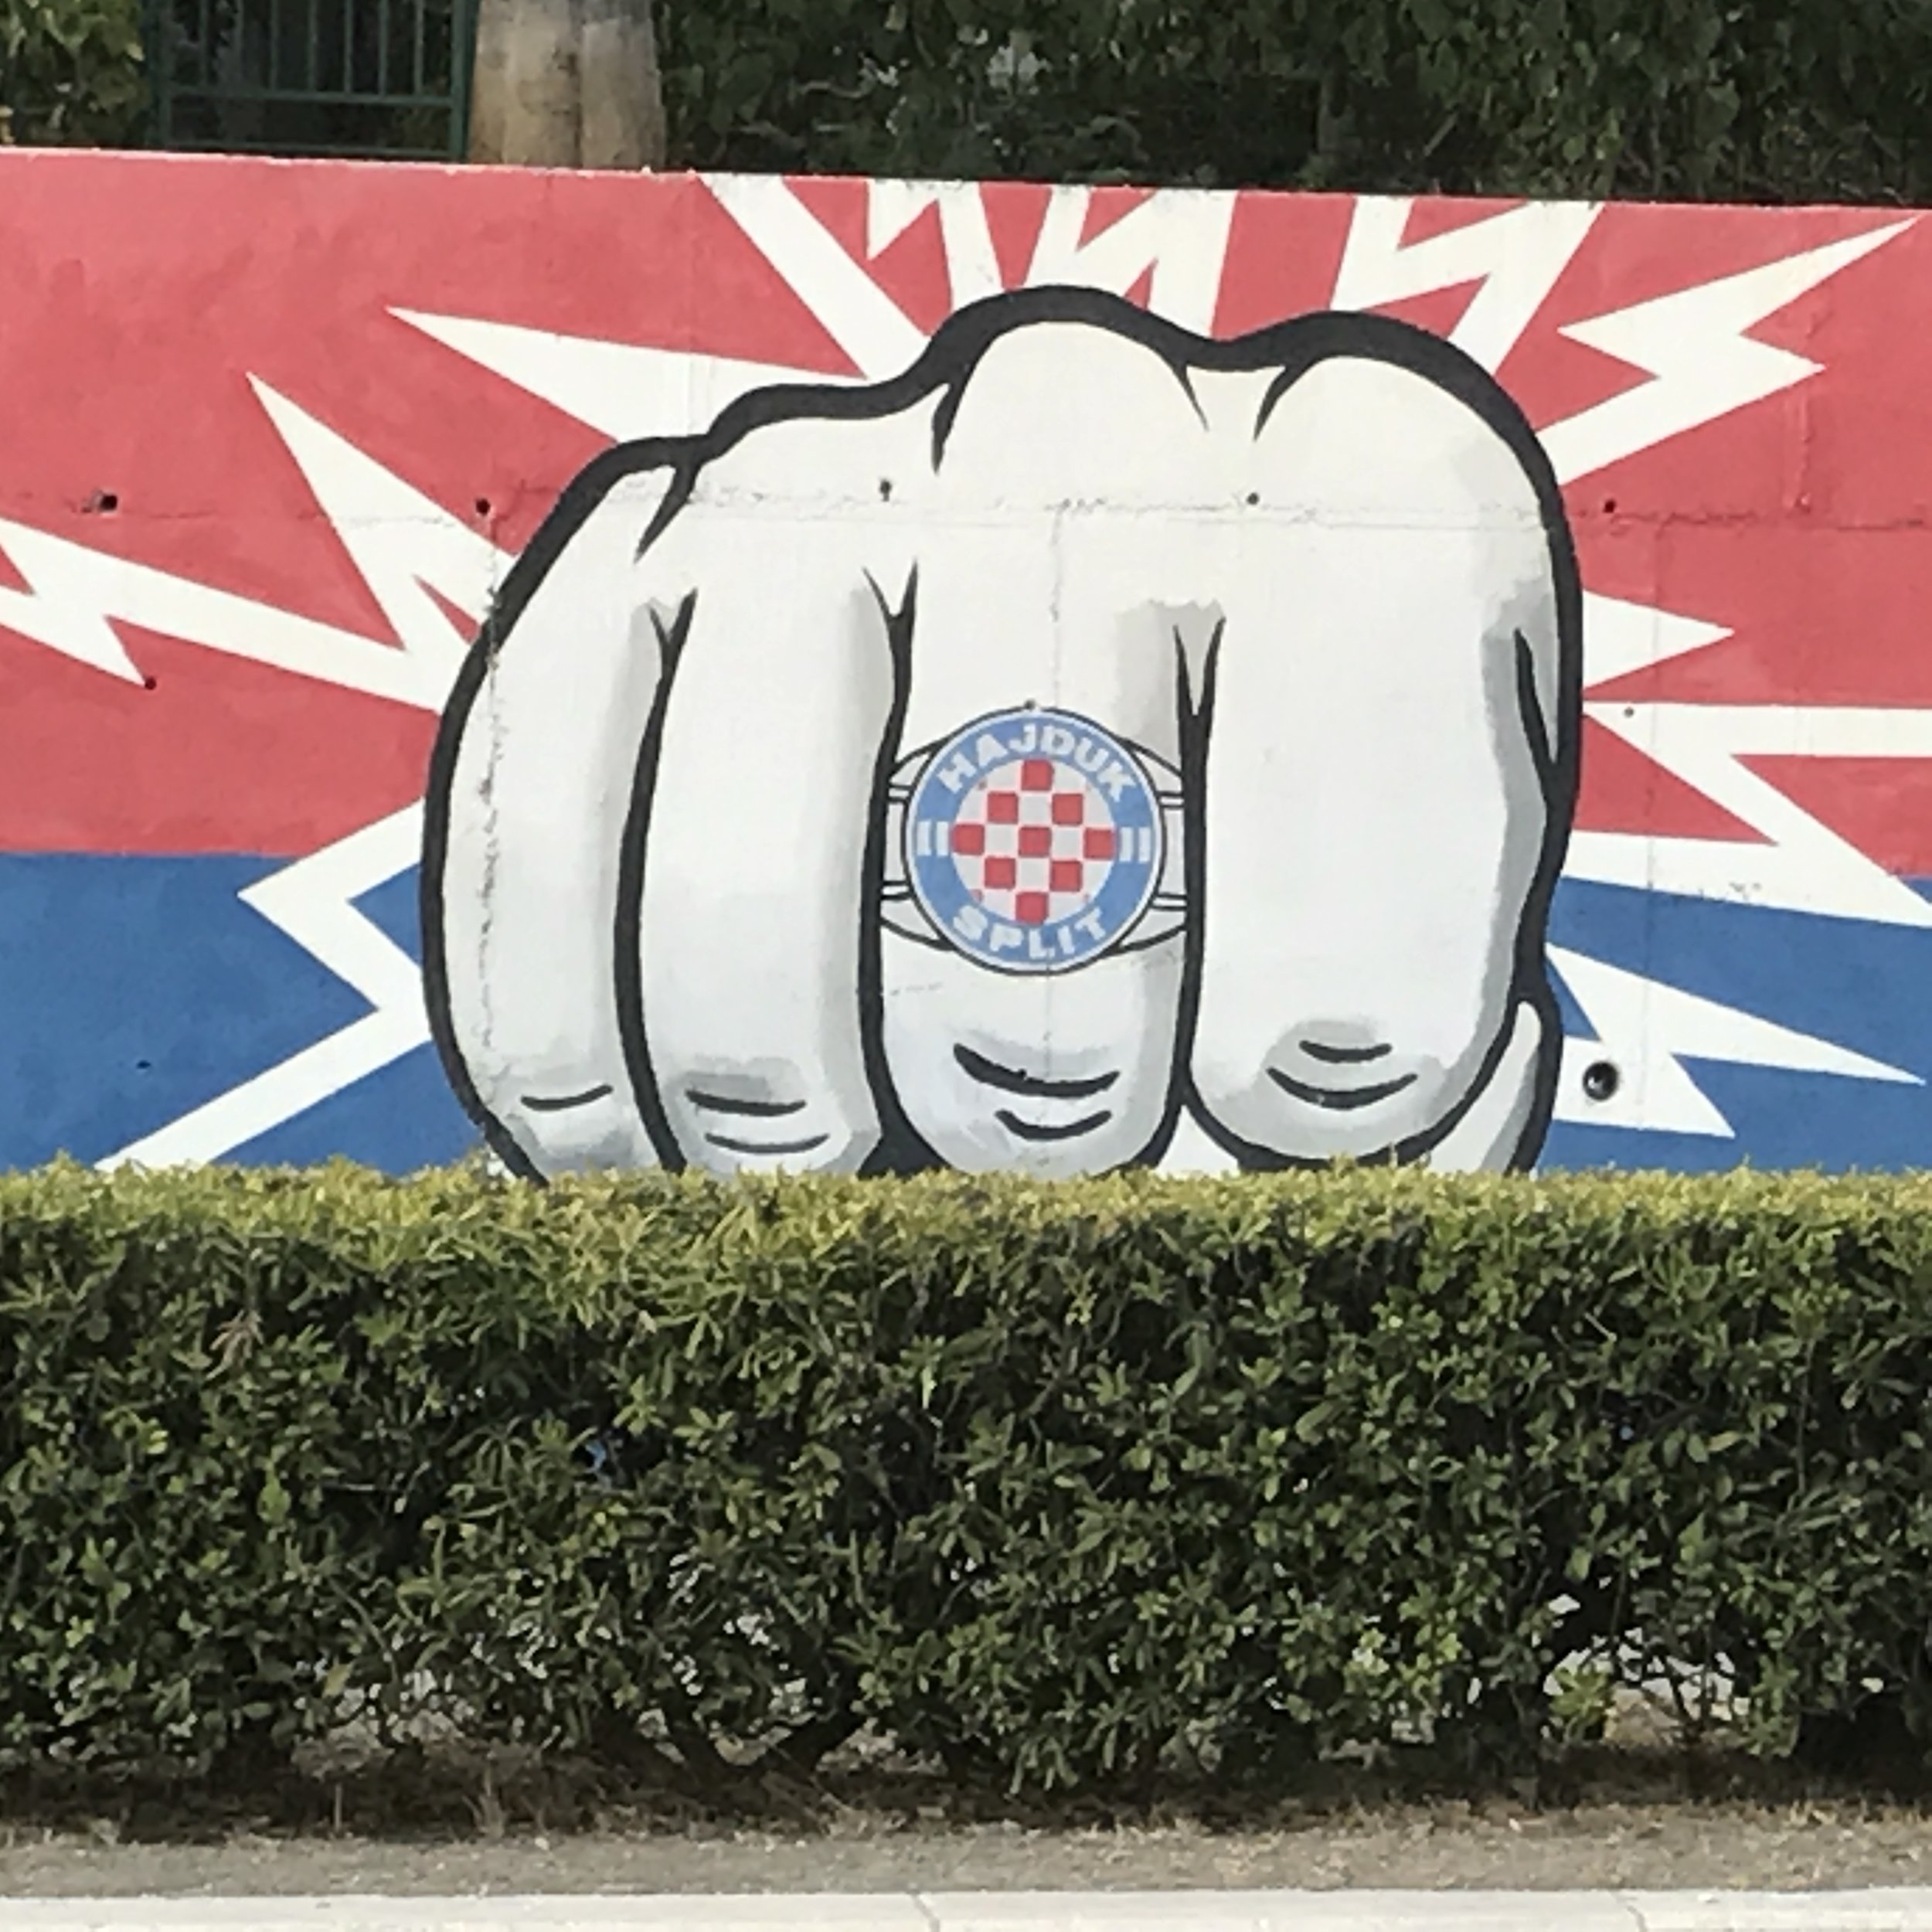 Hajduk Split graffiti  Splits, Graffiti, Soccer club